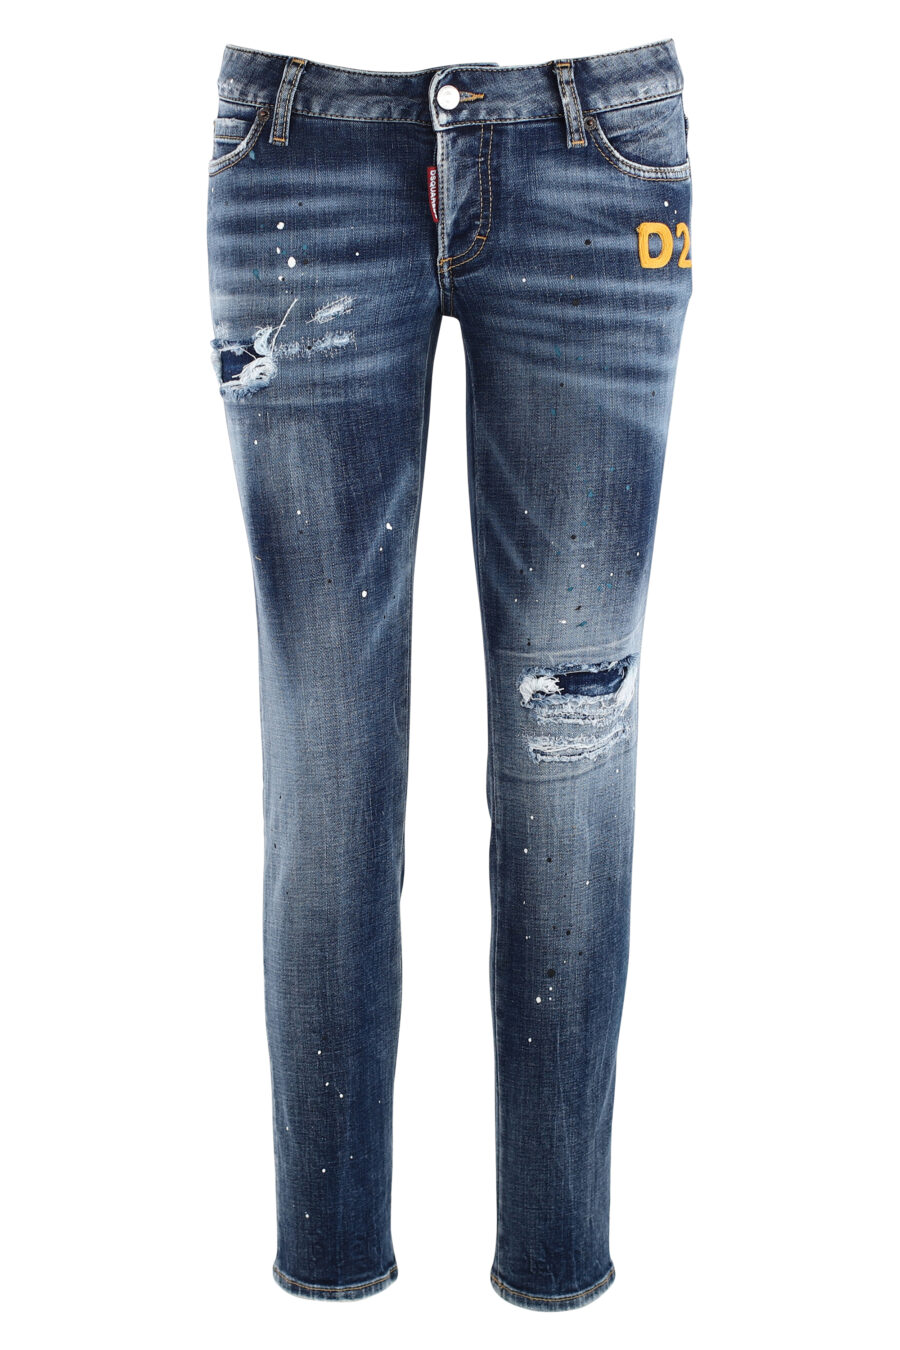 Jean bleu Jennifer cropped jean avec broderie jaune - IMG 7585